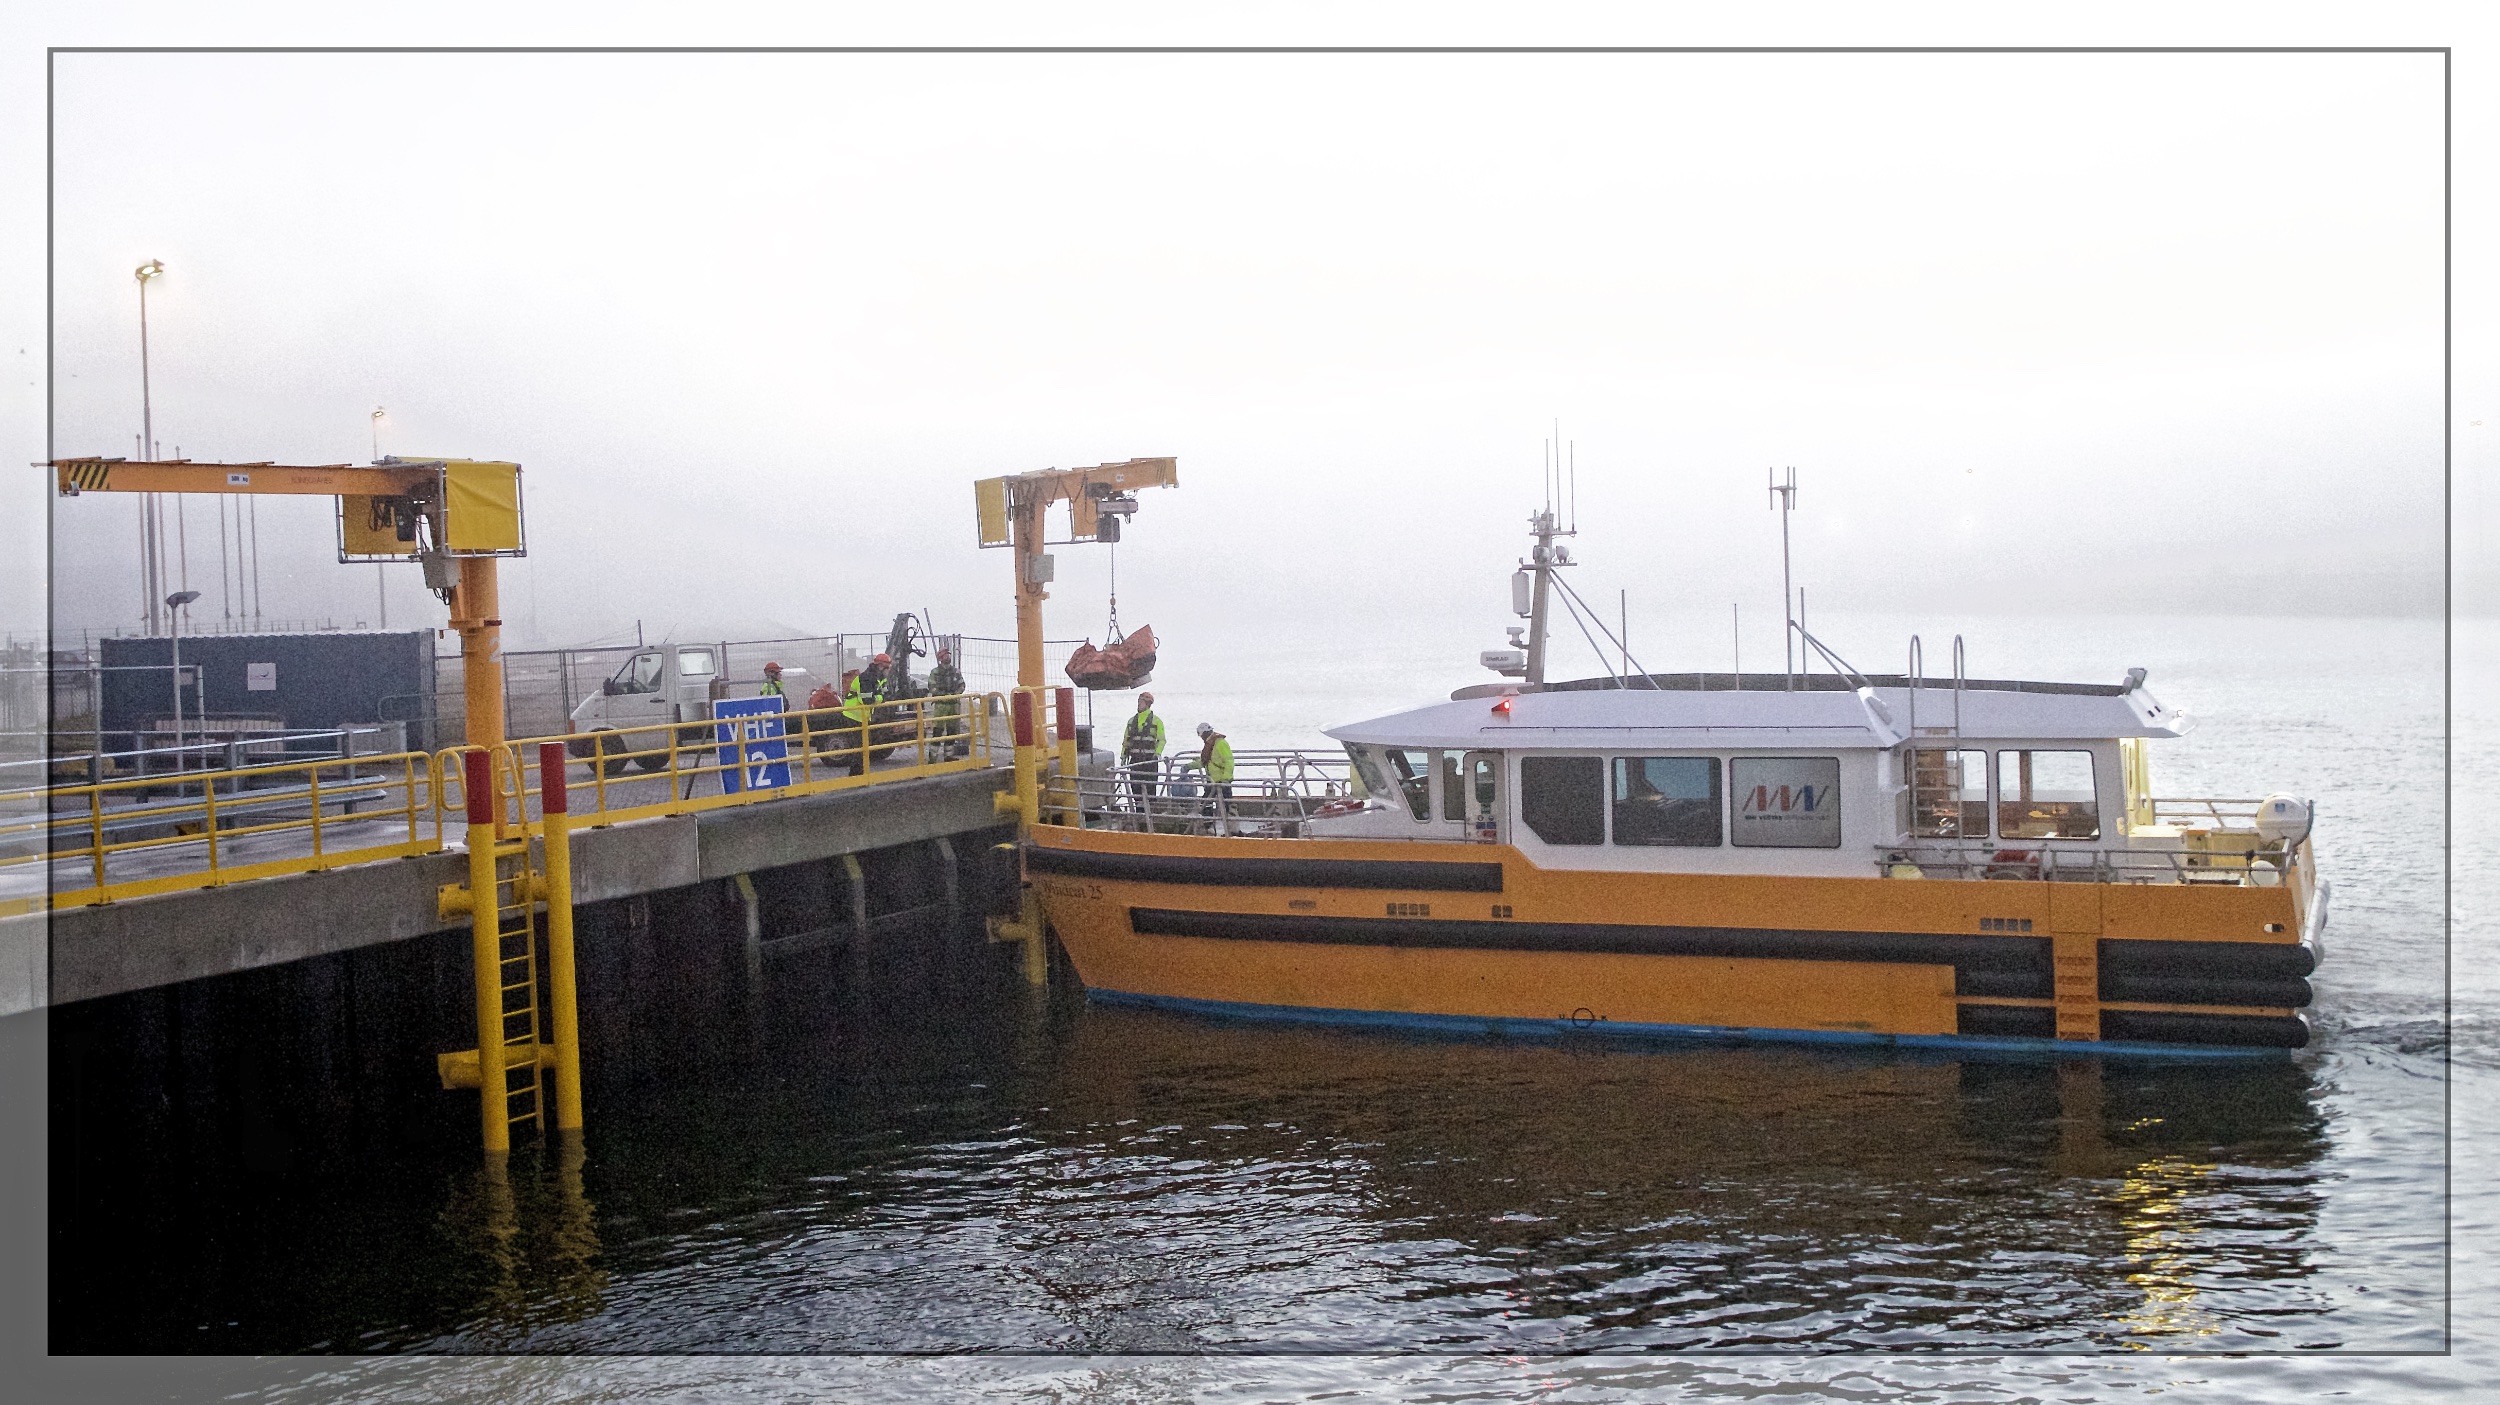 MHI Vestas, Eneco Get Their Own Boat Landings in IJmuiden